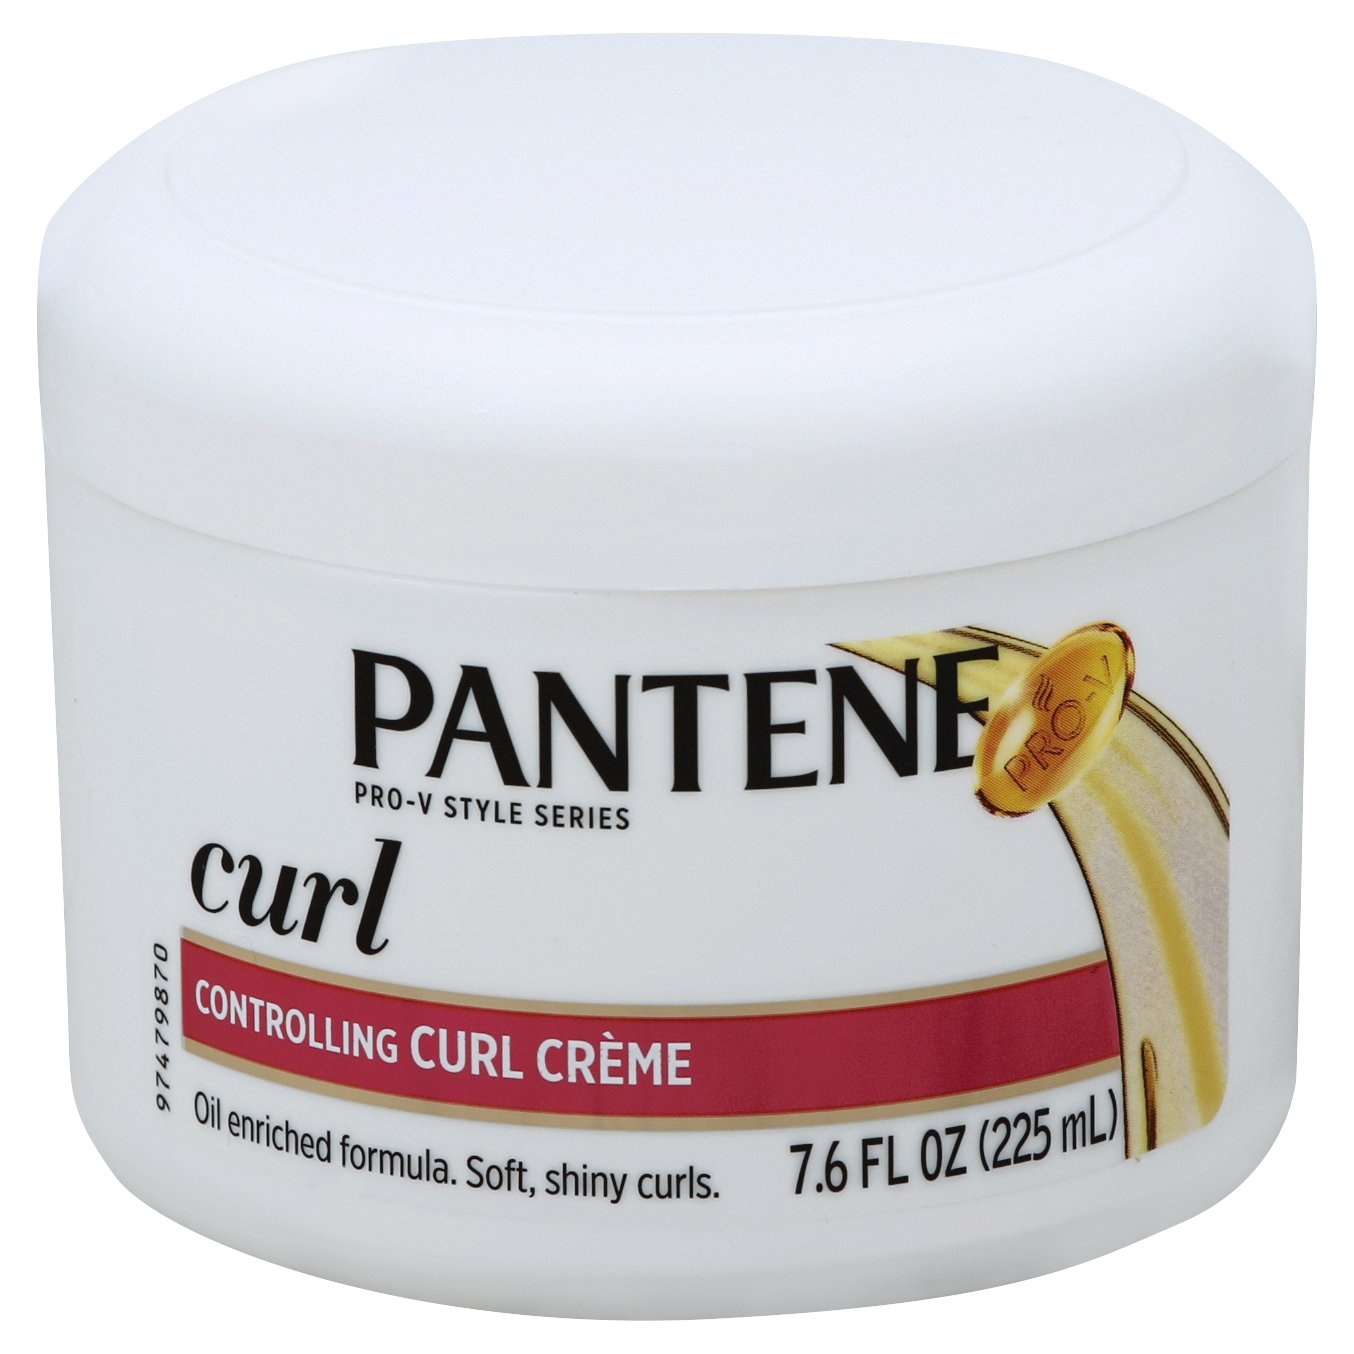 Pantene Pro-V Curl Controlling Curl Creme  fl oz | Shipt